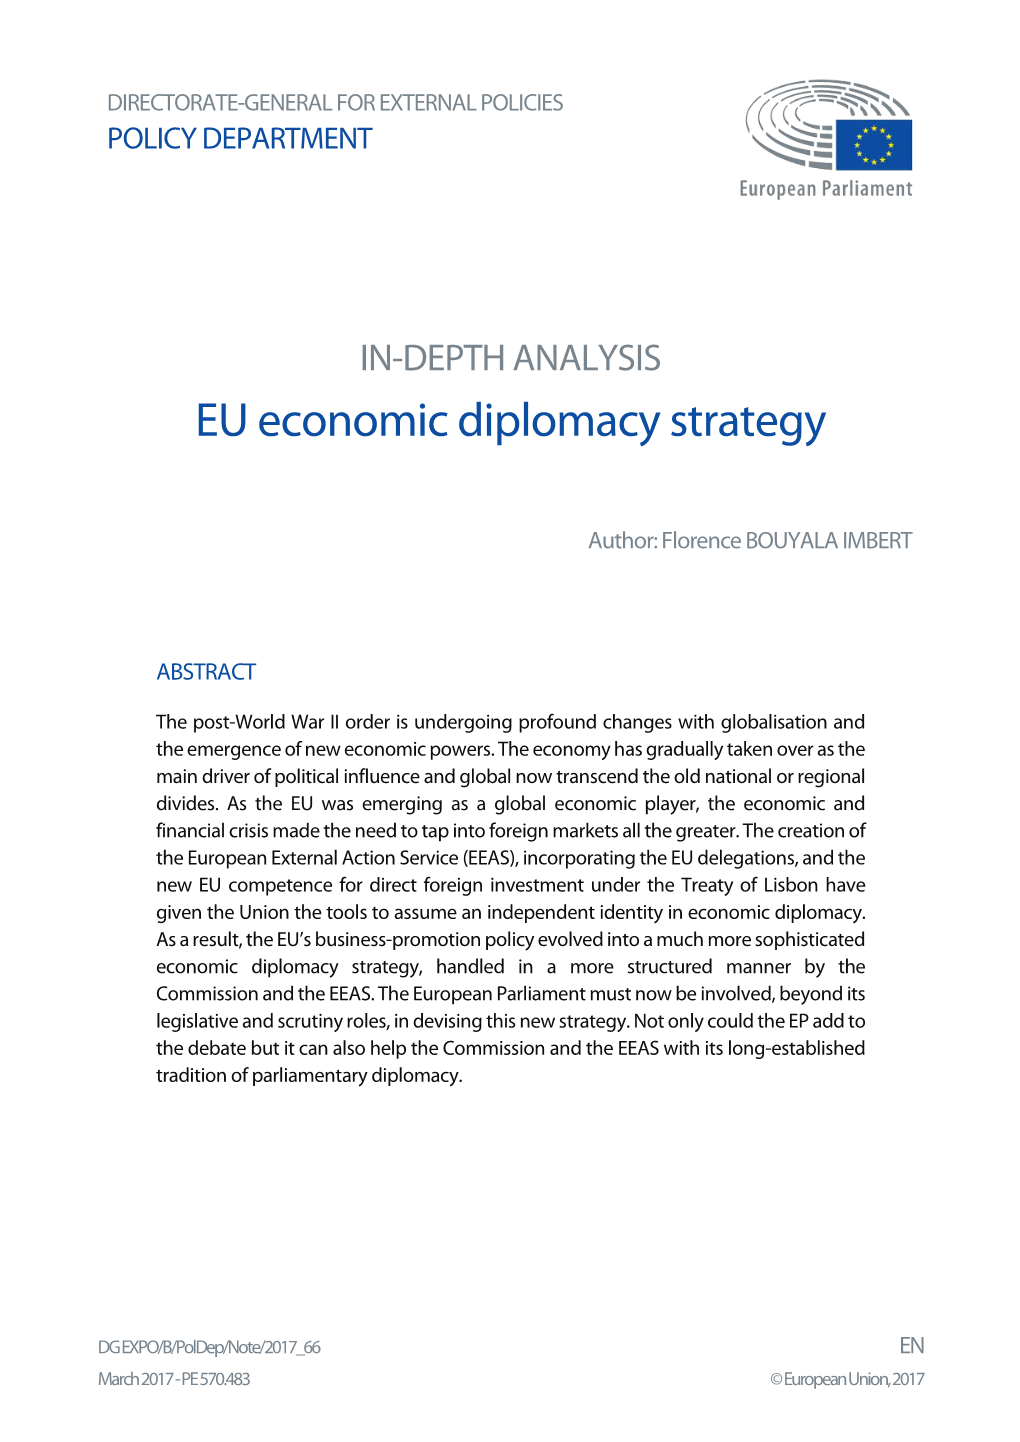 EU Economic Diplomacy Strategy